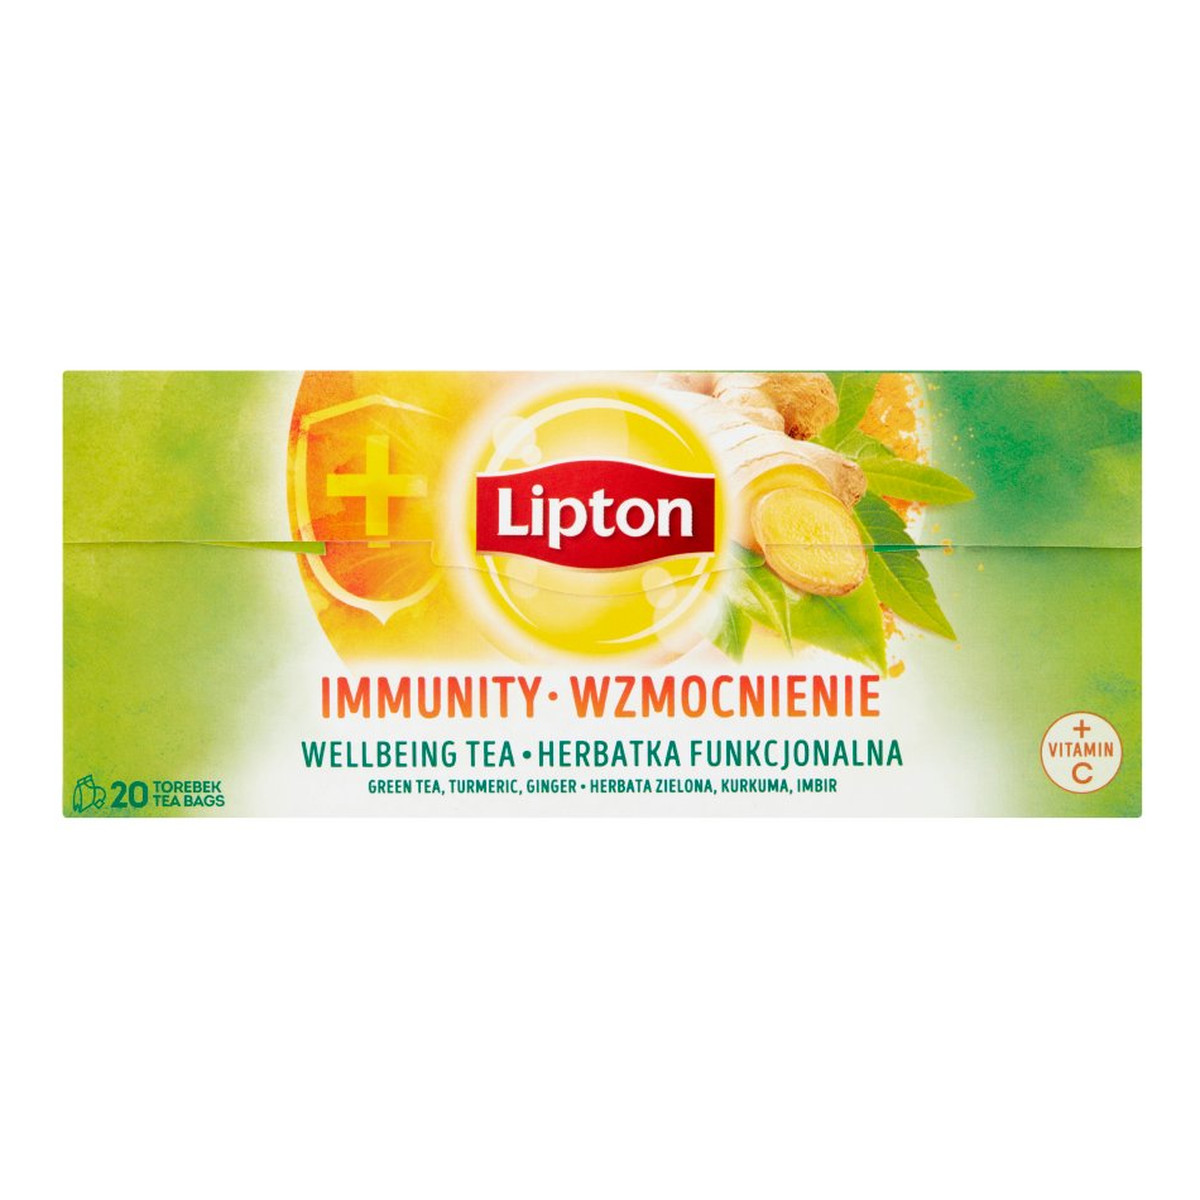 Lipton Wzmocnienie Herbata funkcjonalna 20 torebek 32g